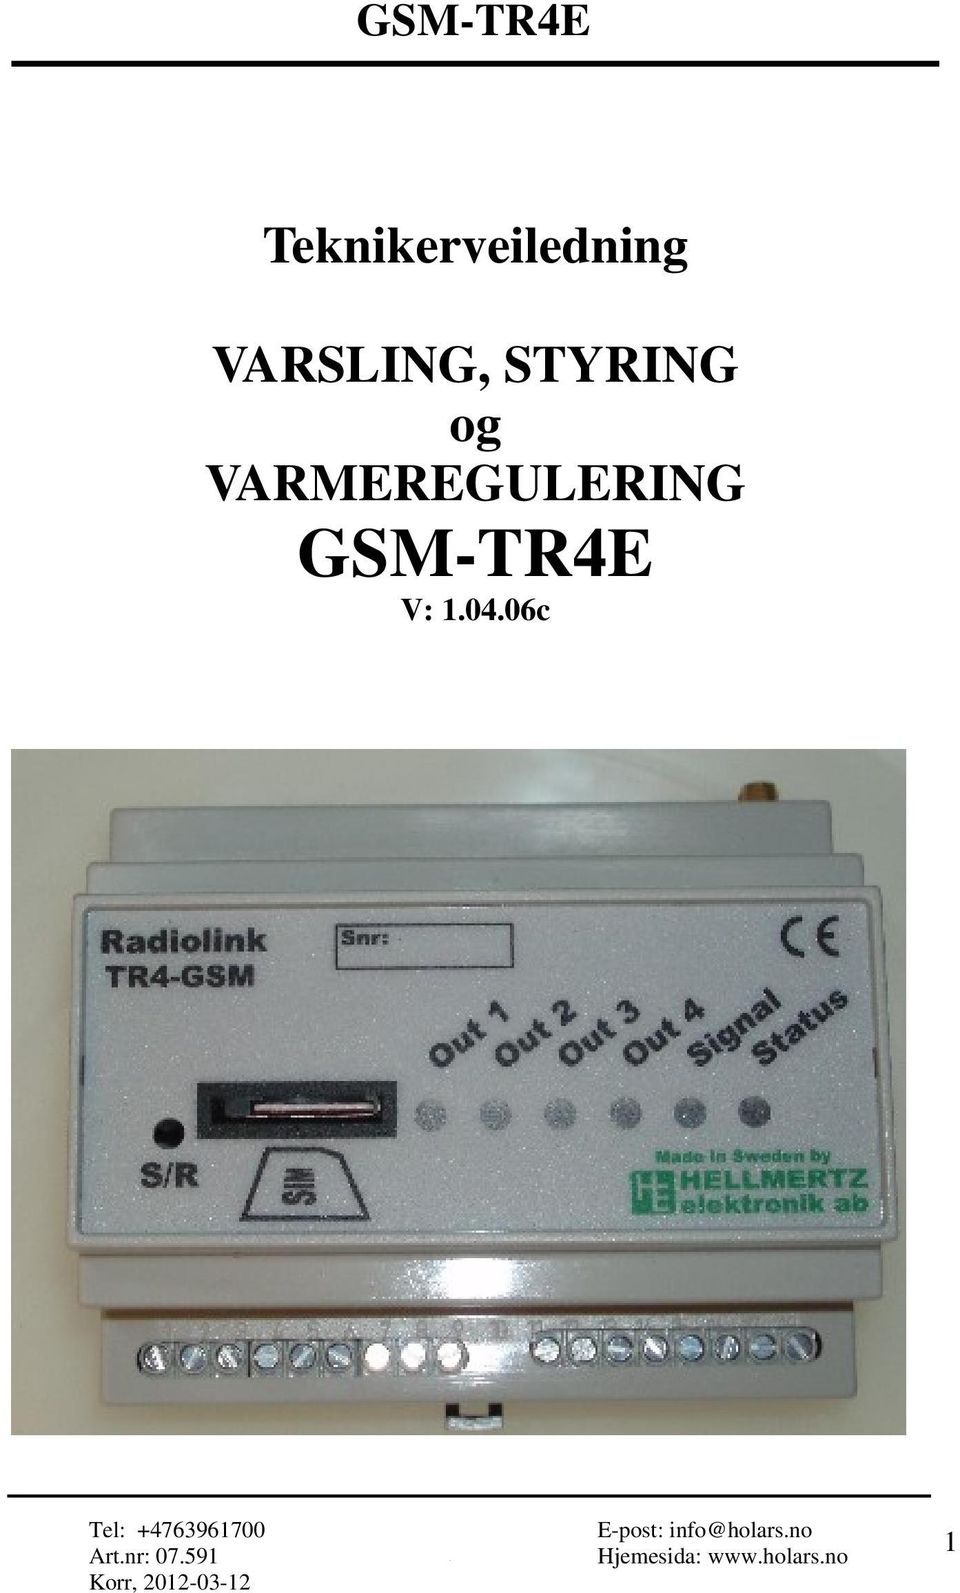 VARMEREGULERING GSM-TR4E